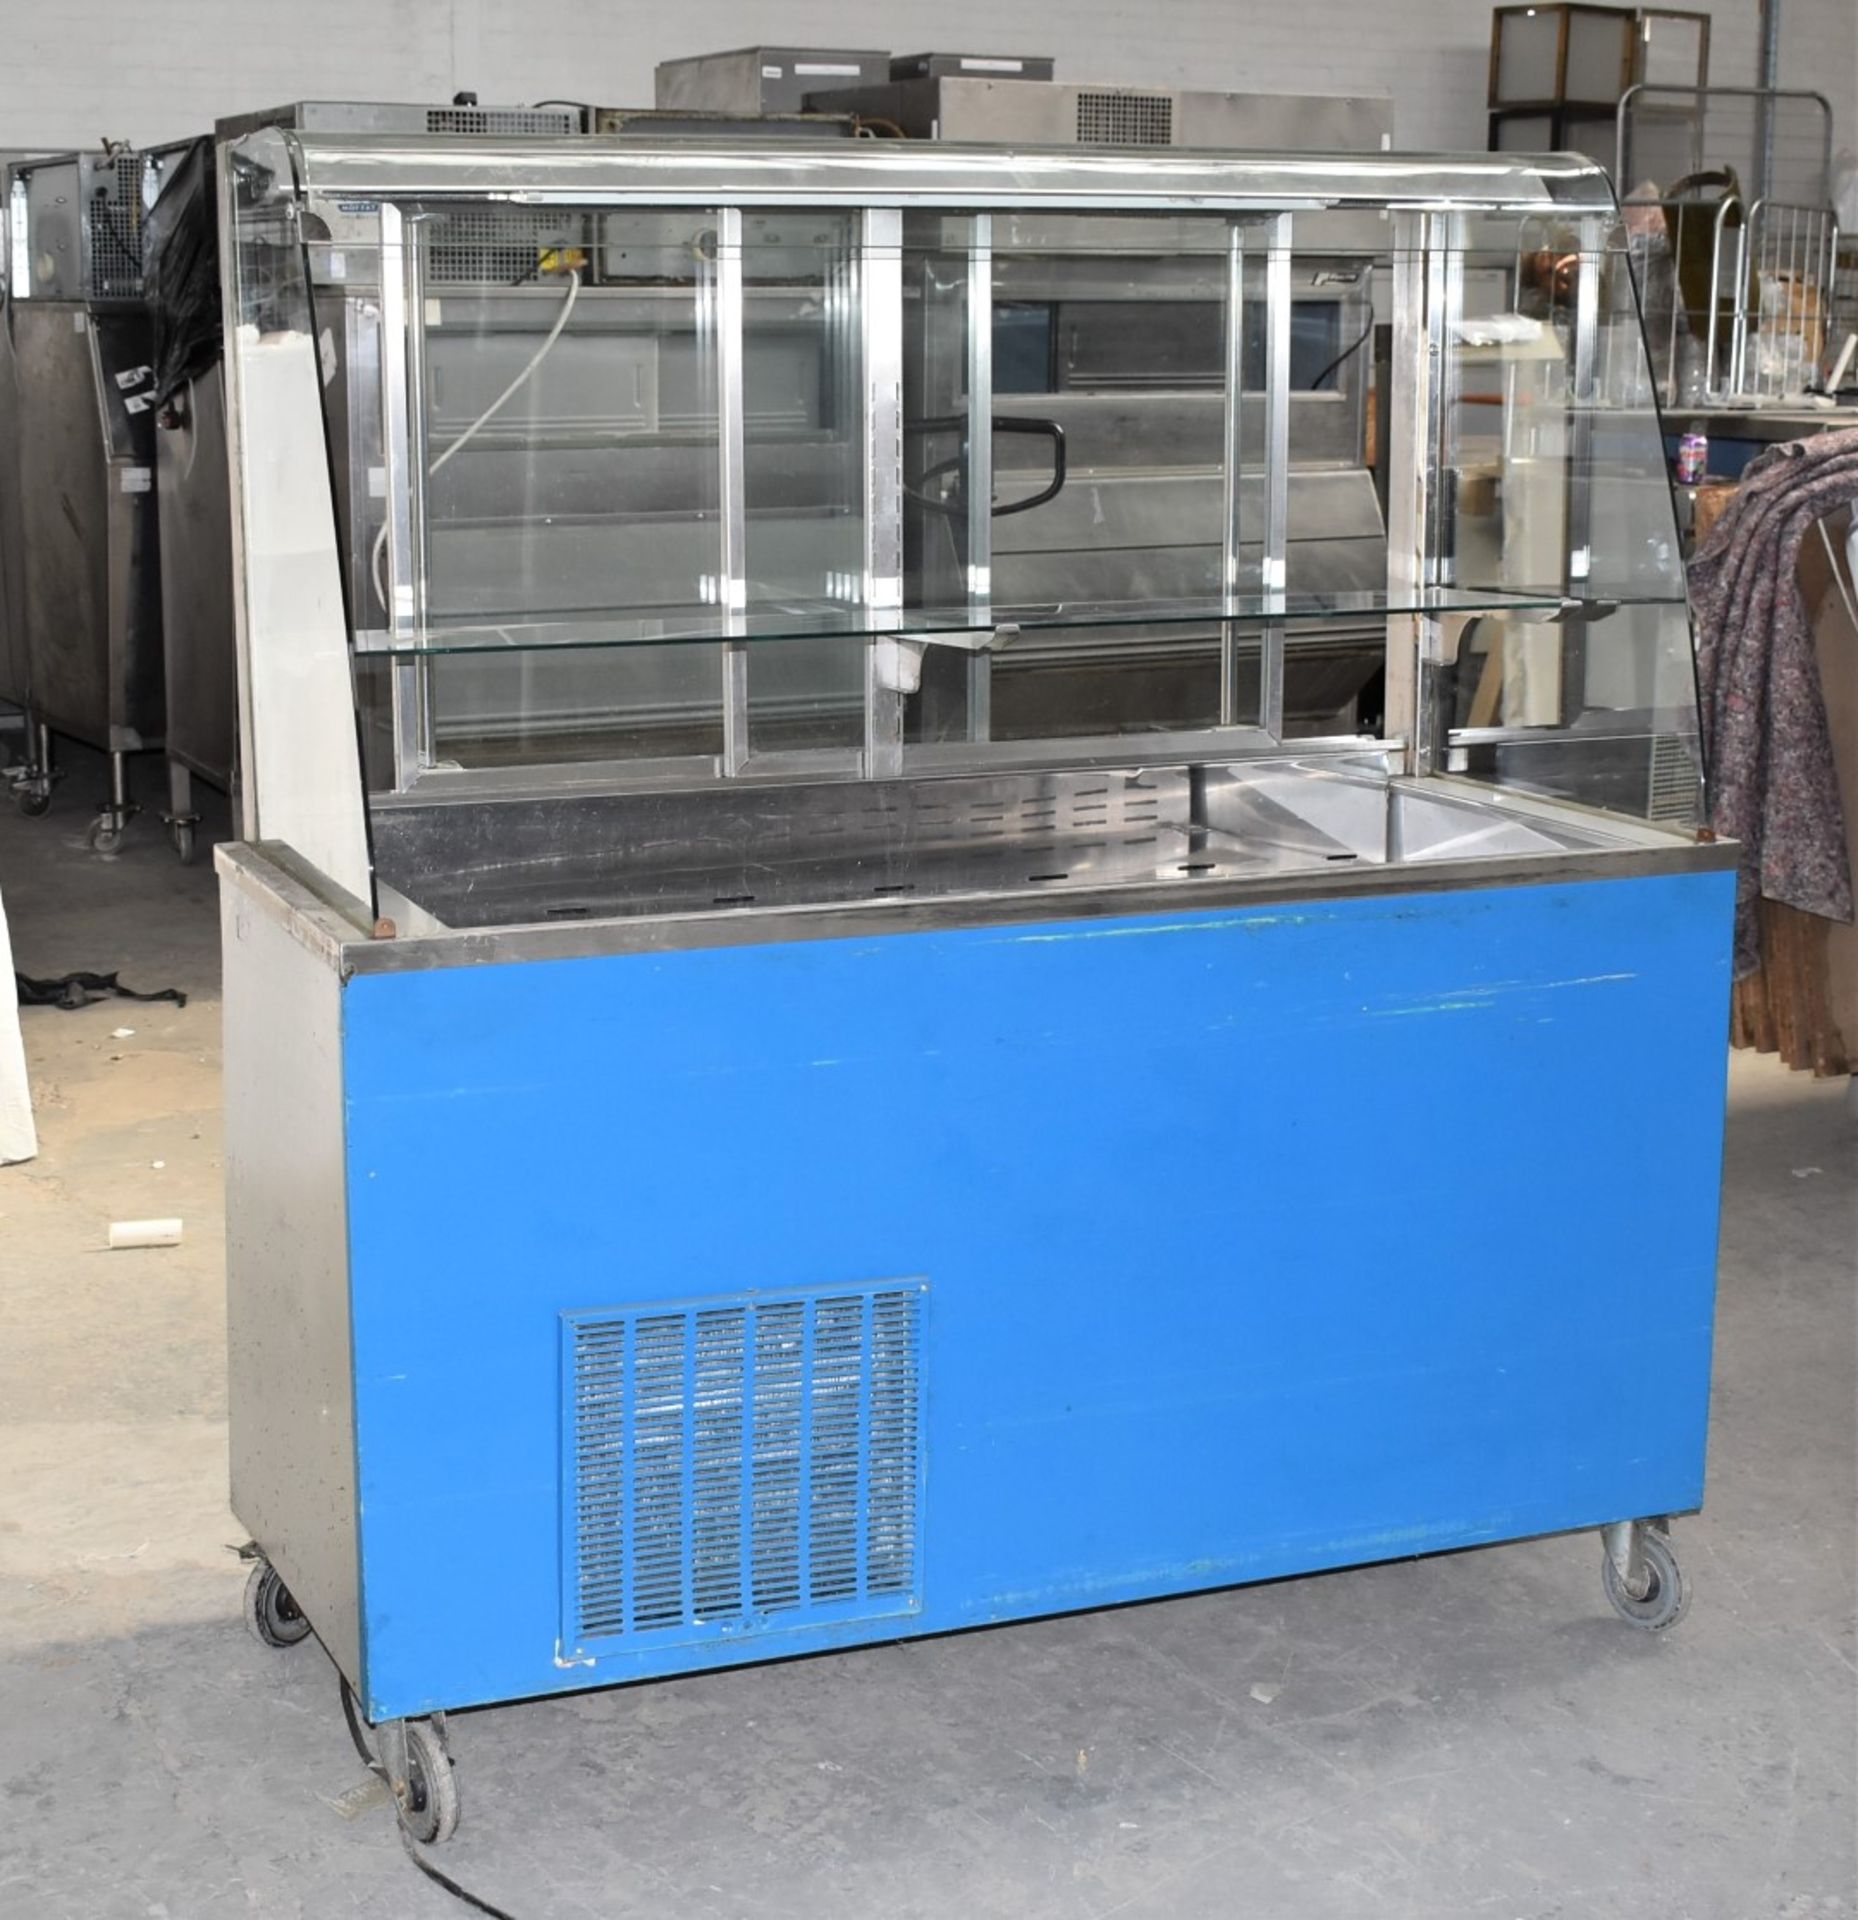 1 x Moffat Self Serve Refrigerated Food Chiller - 240v - Dimensions: H160 x W150 x D64 cms